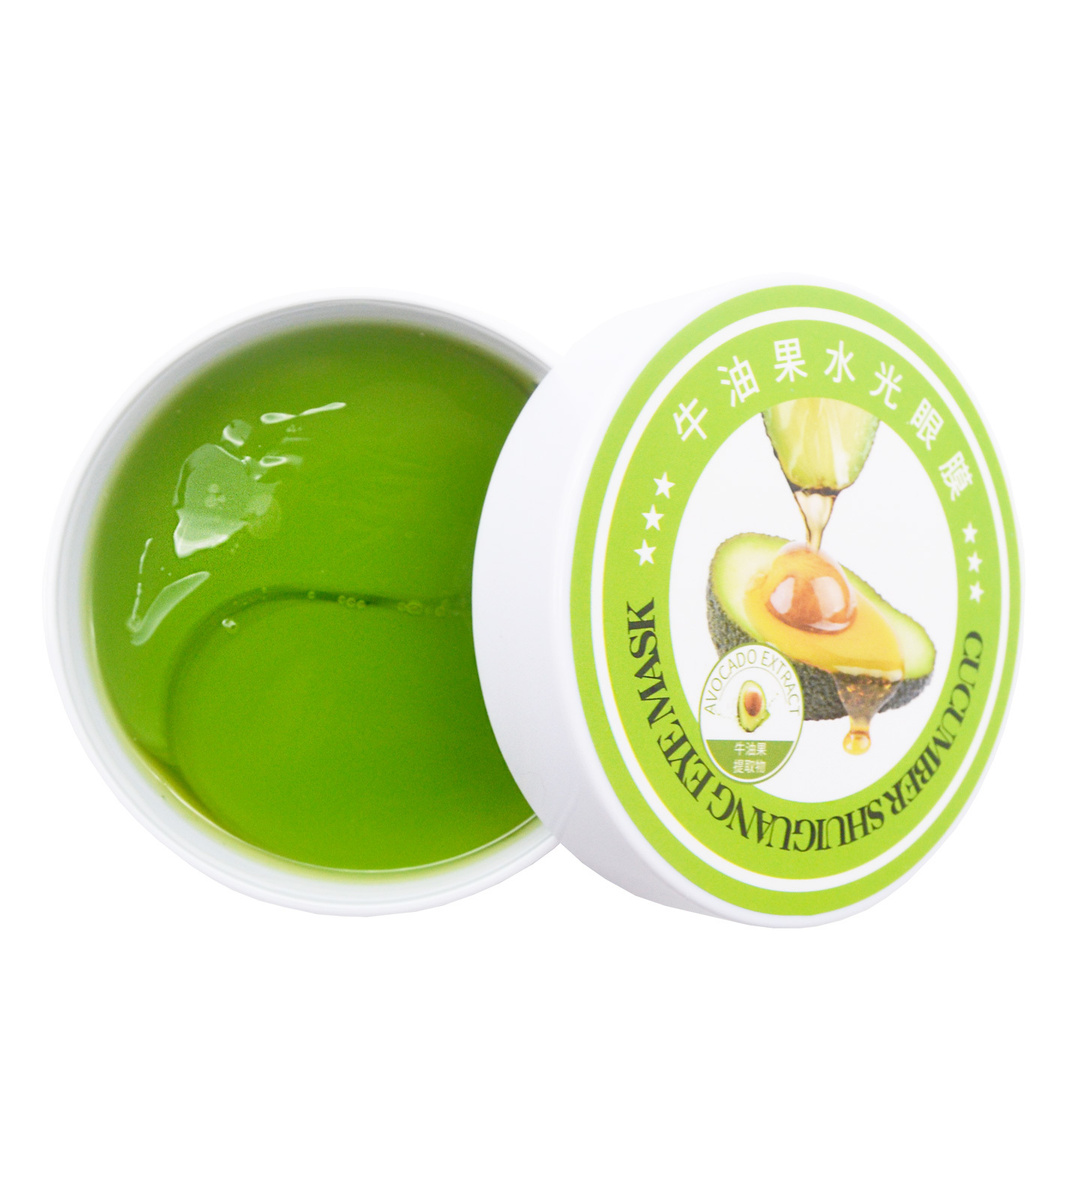 Гидрогелевые патчи SersanLove Avocado extract с экстрактом авокадо, 60 шт.